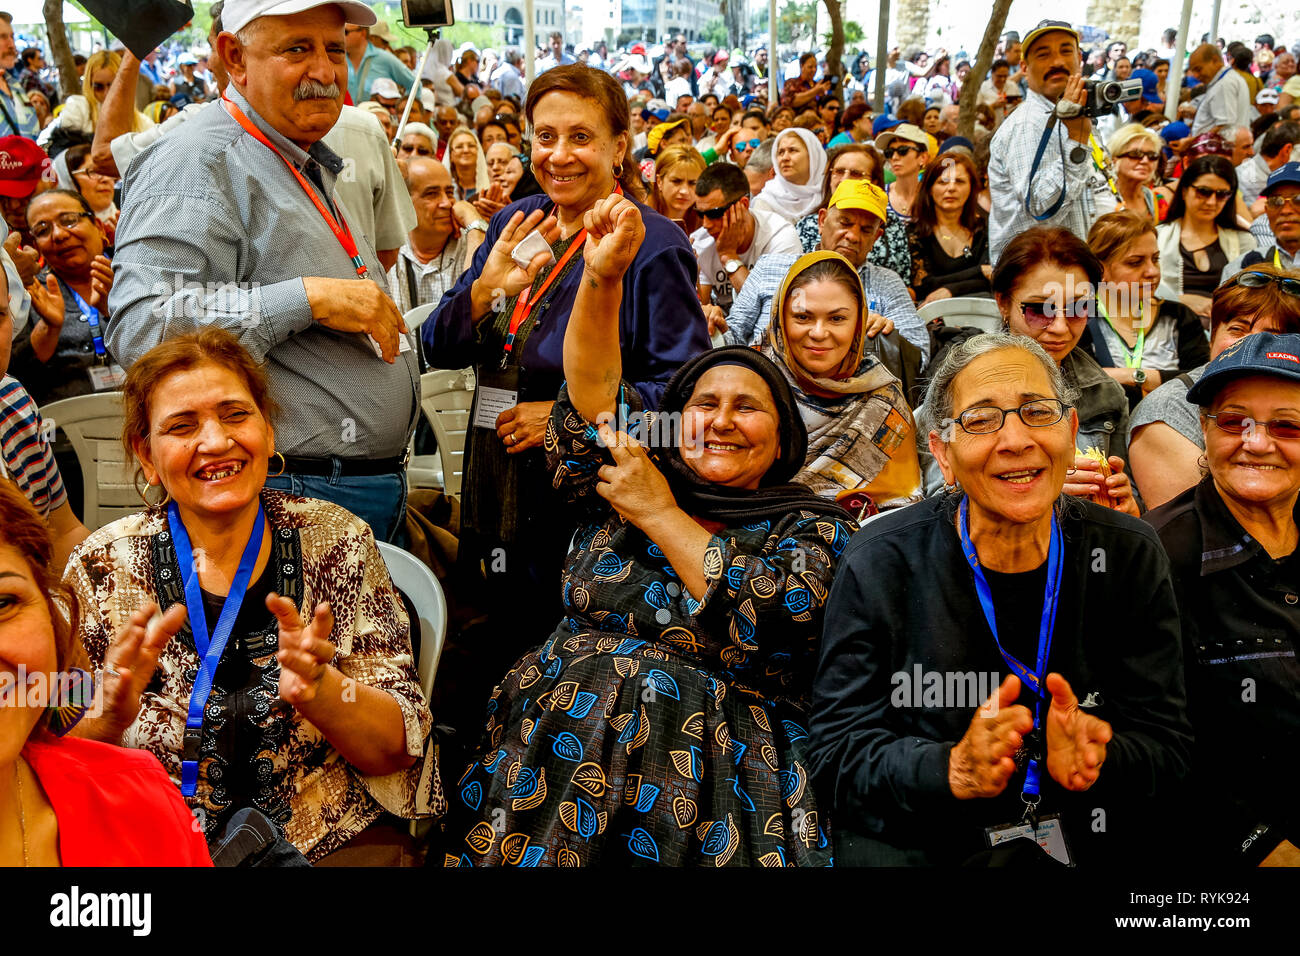 Egyptian coptic christians celebrating Easter in Jerusalem, Israel. Stock Photo